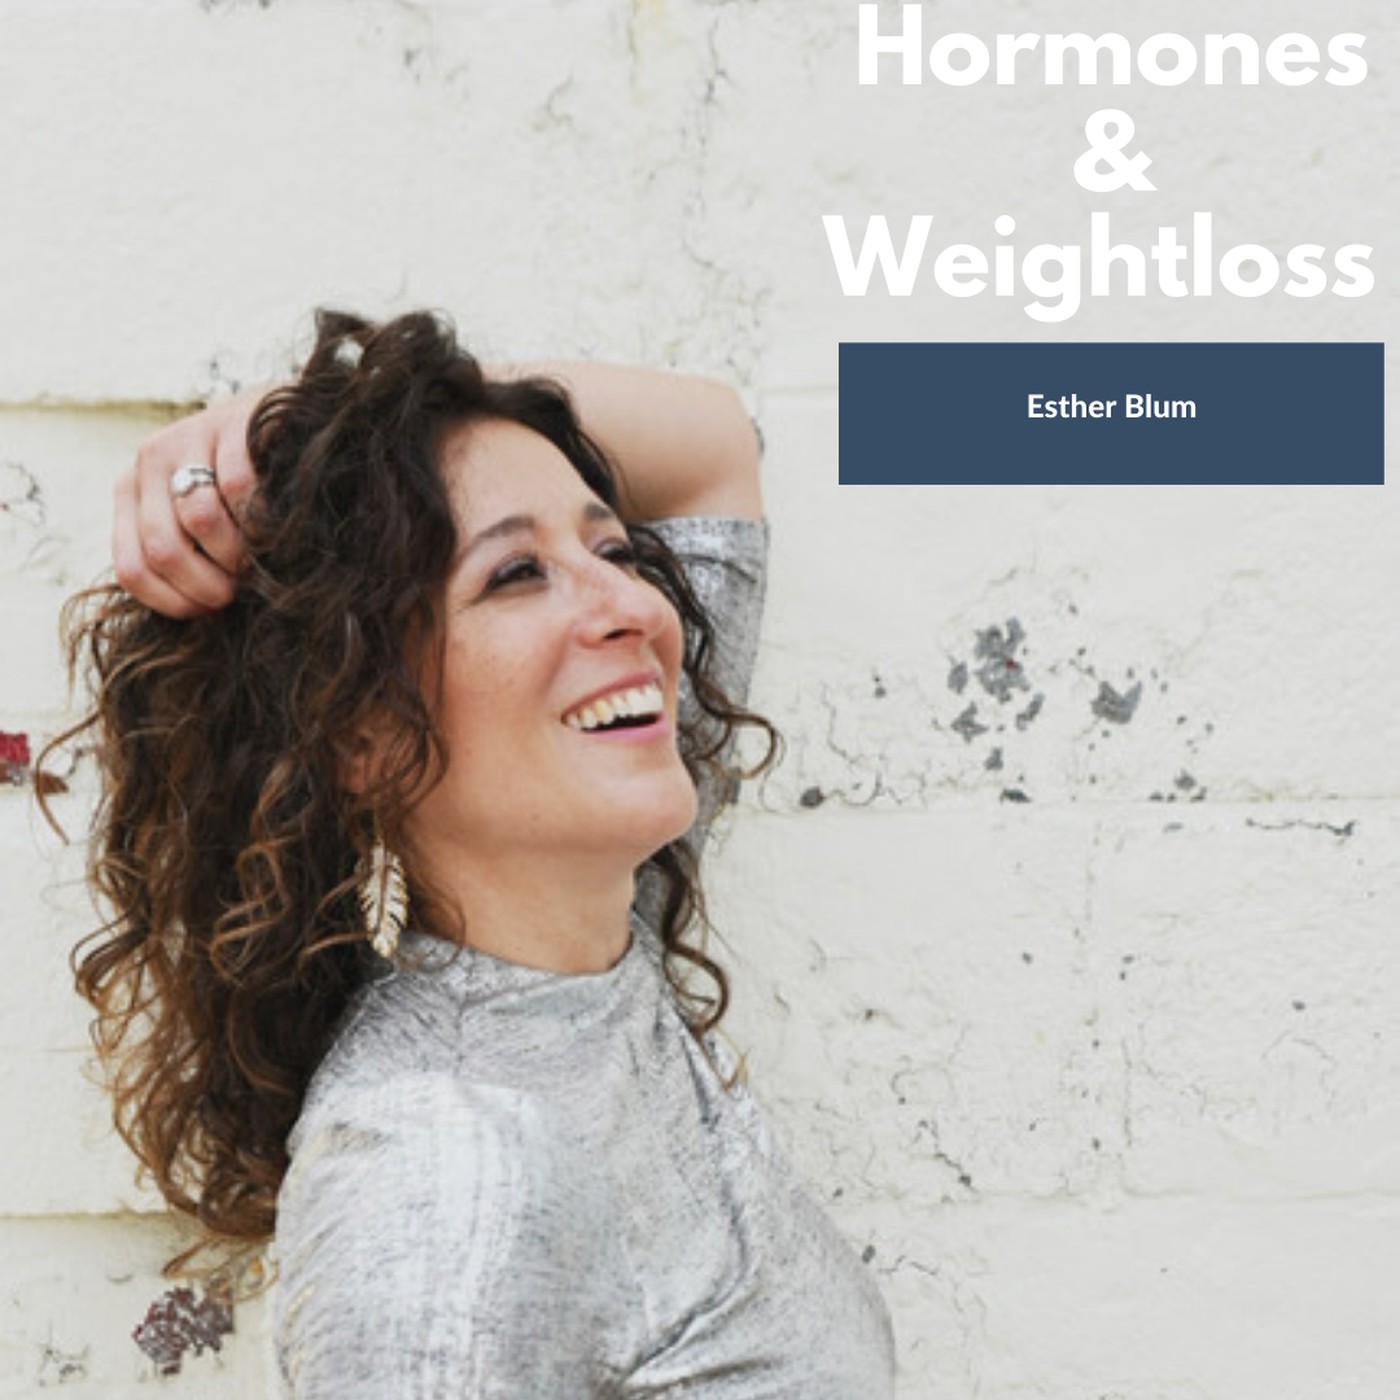 Hormones & Weightloss with Integrative Dietitian Esther Blum